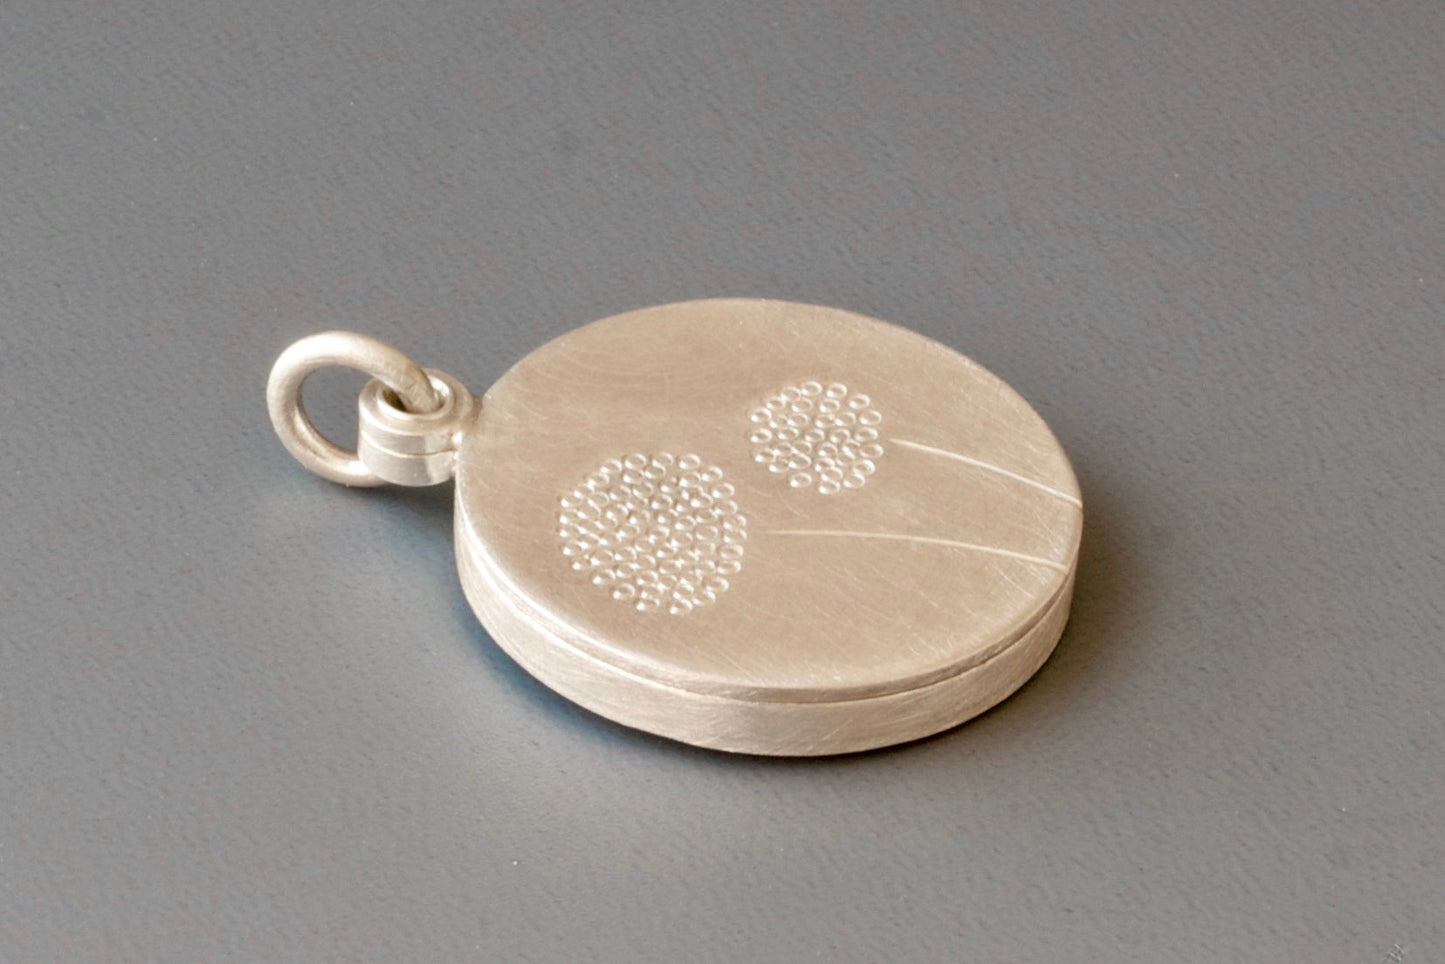 elegant round dandelion locket for one photo in sterling silver